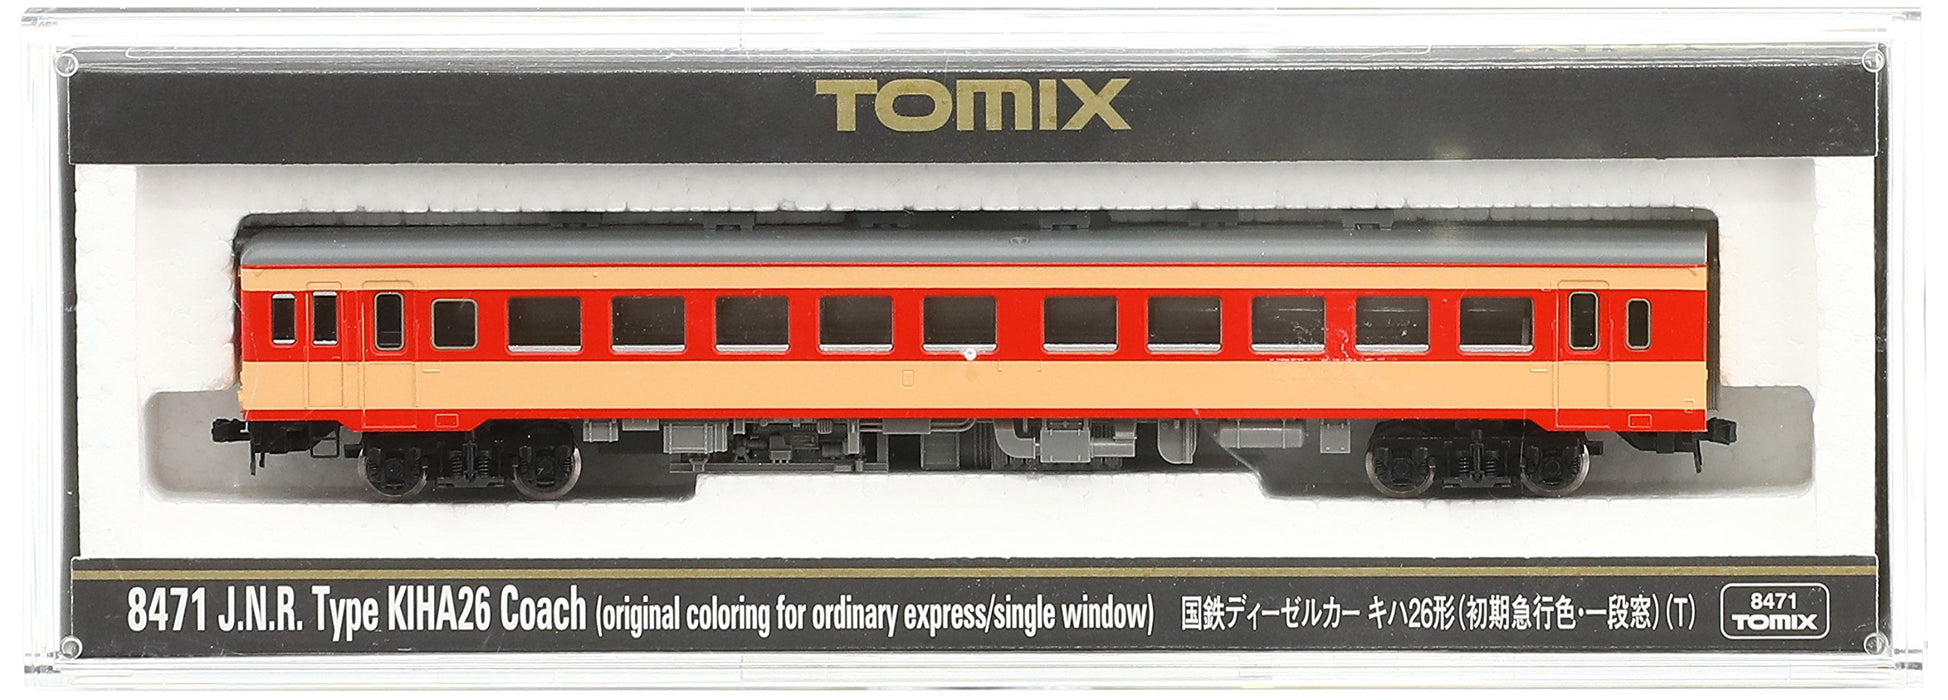 Tomytec Tomix N Gauge Kiha 26 Early Express Single Window Diesel Railway Model